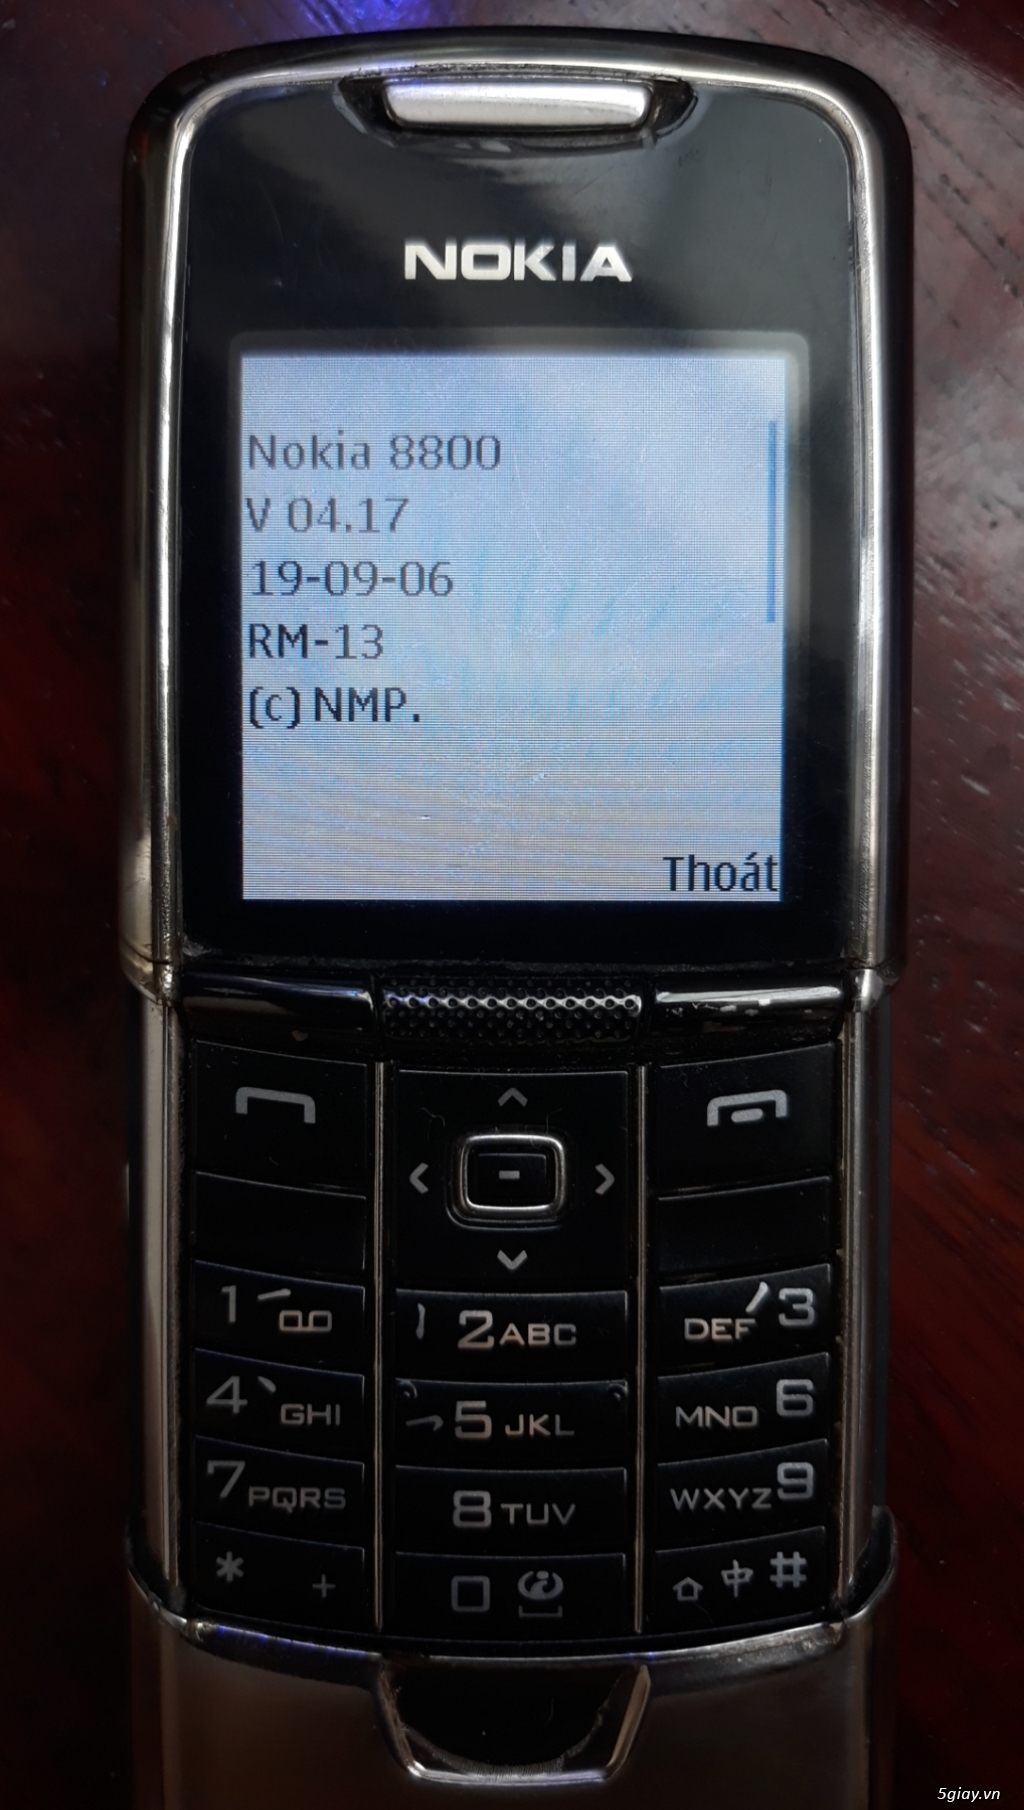 Nokia 8800 Vang danh một thời. - 4